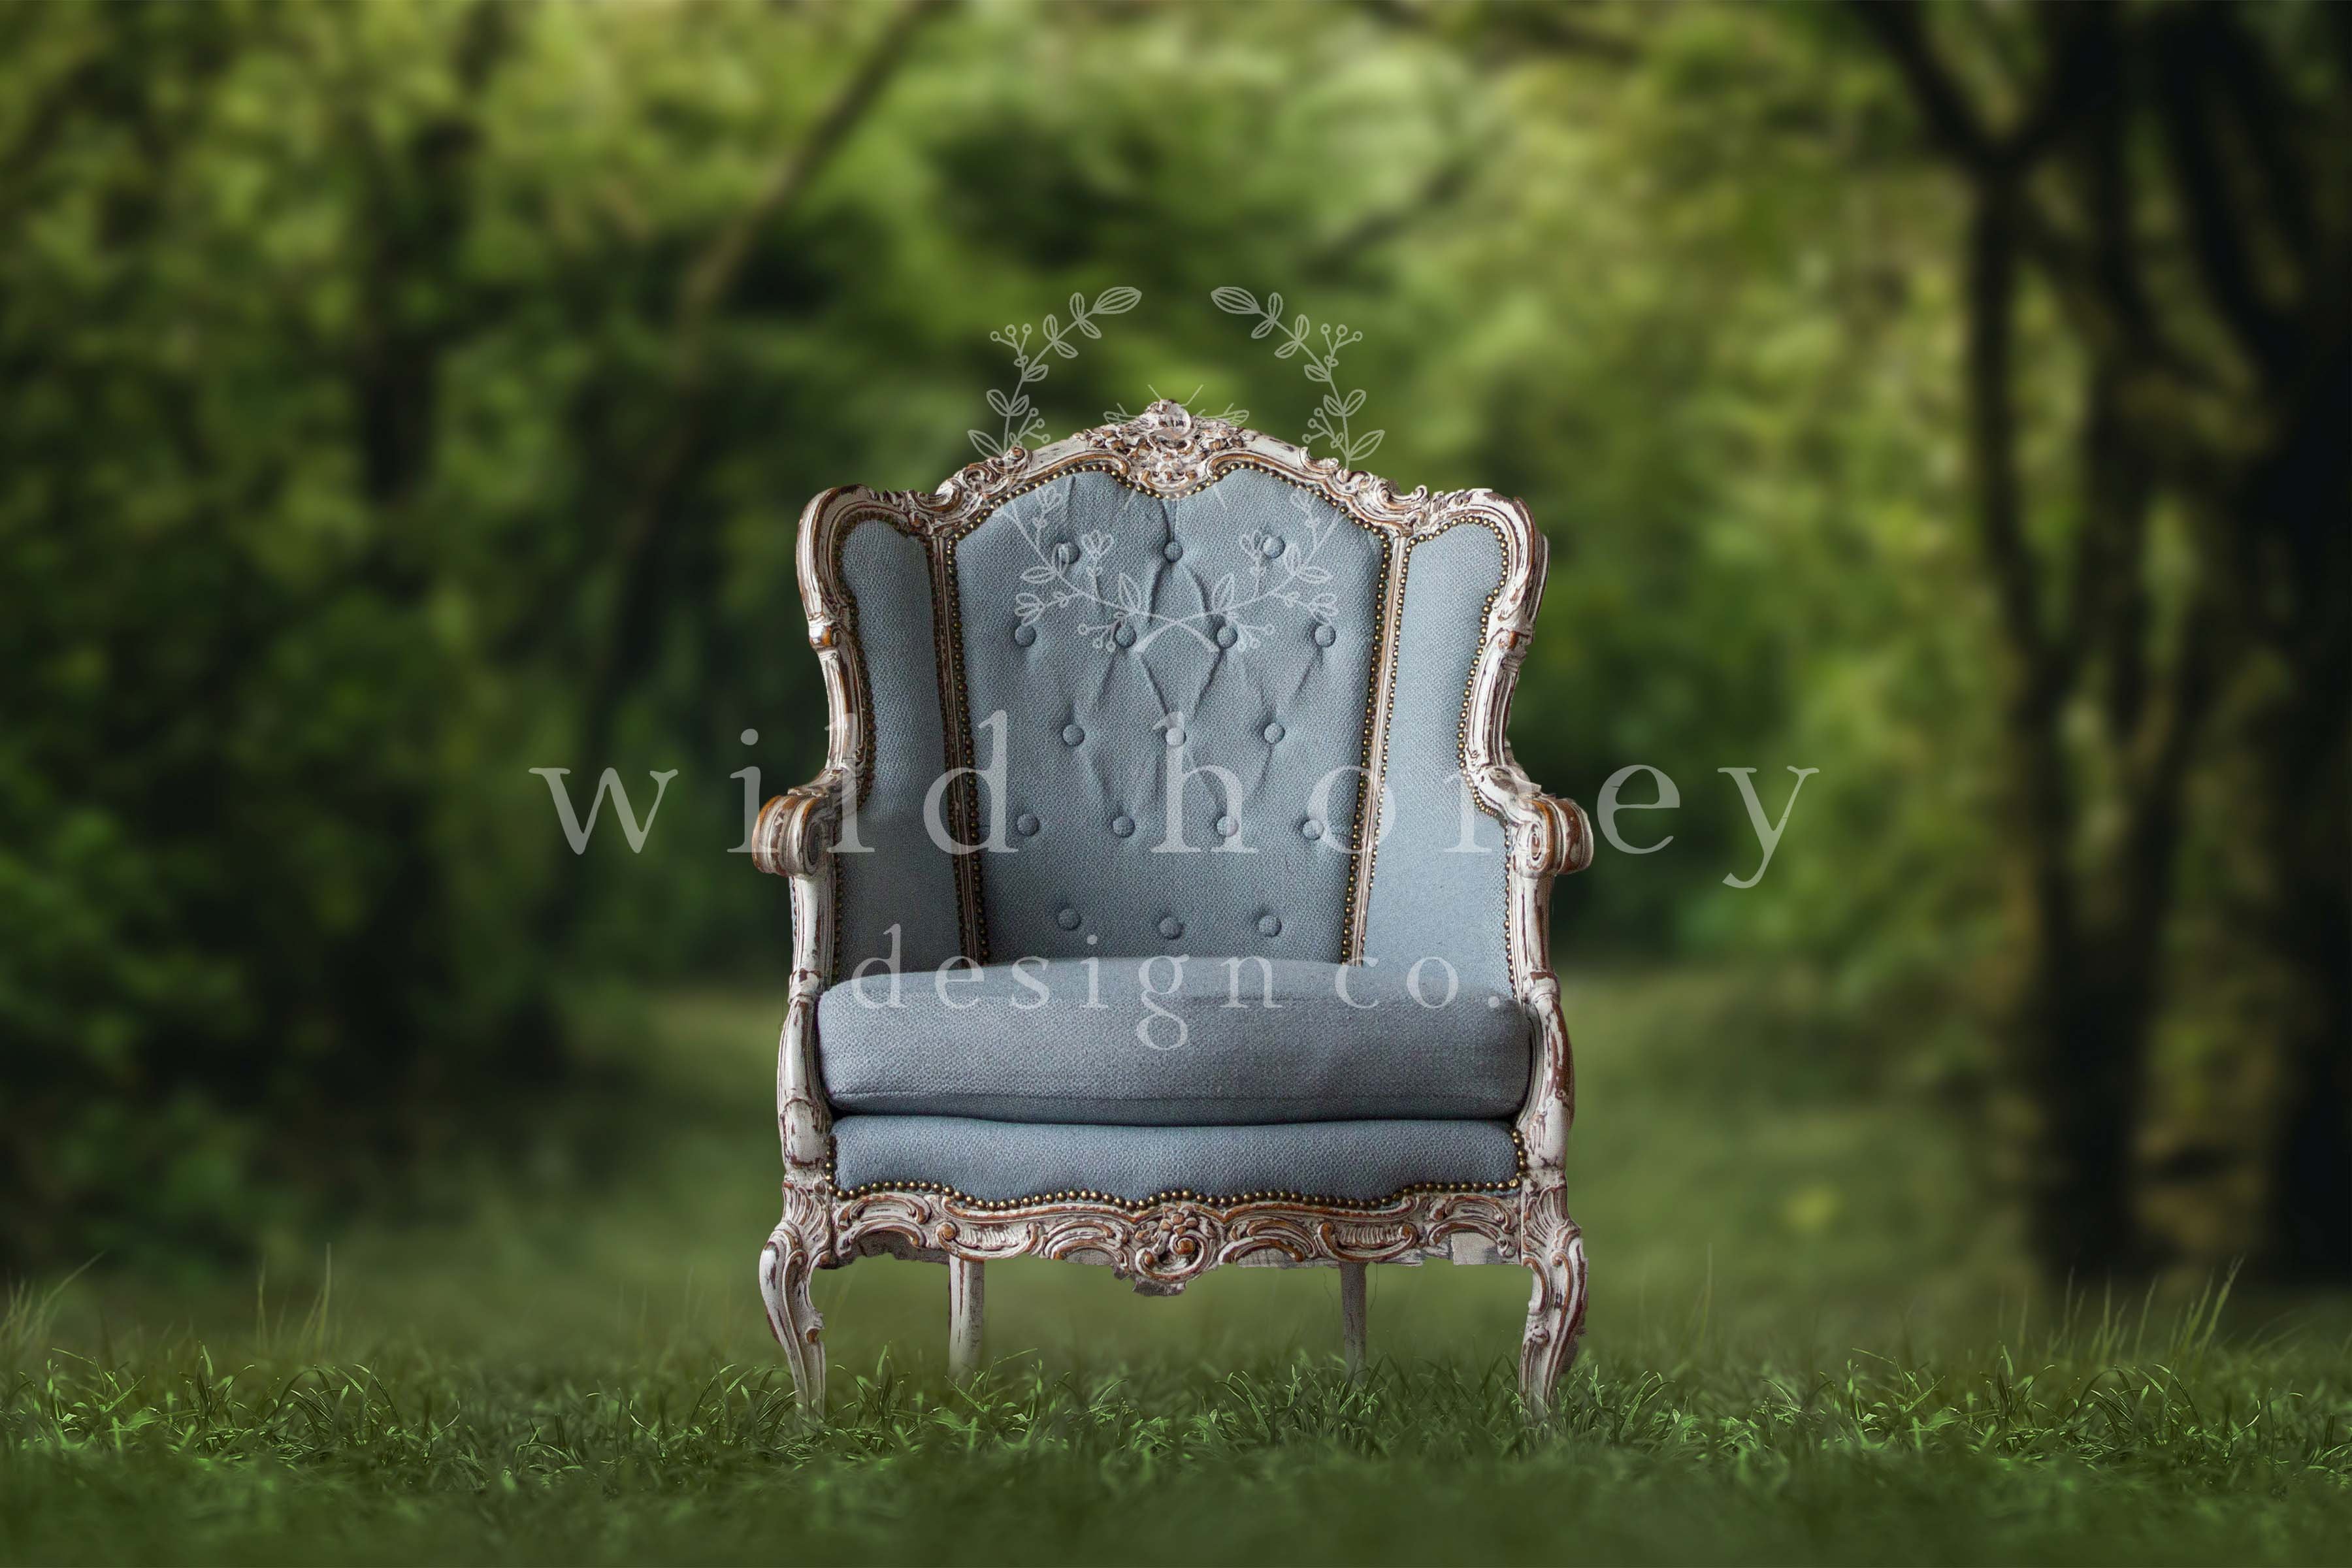 Woodland Chair Digital Backdropcover image.